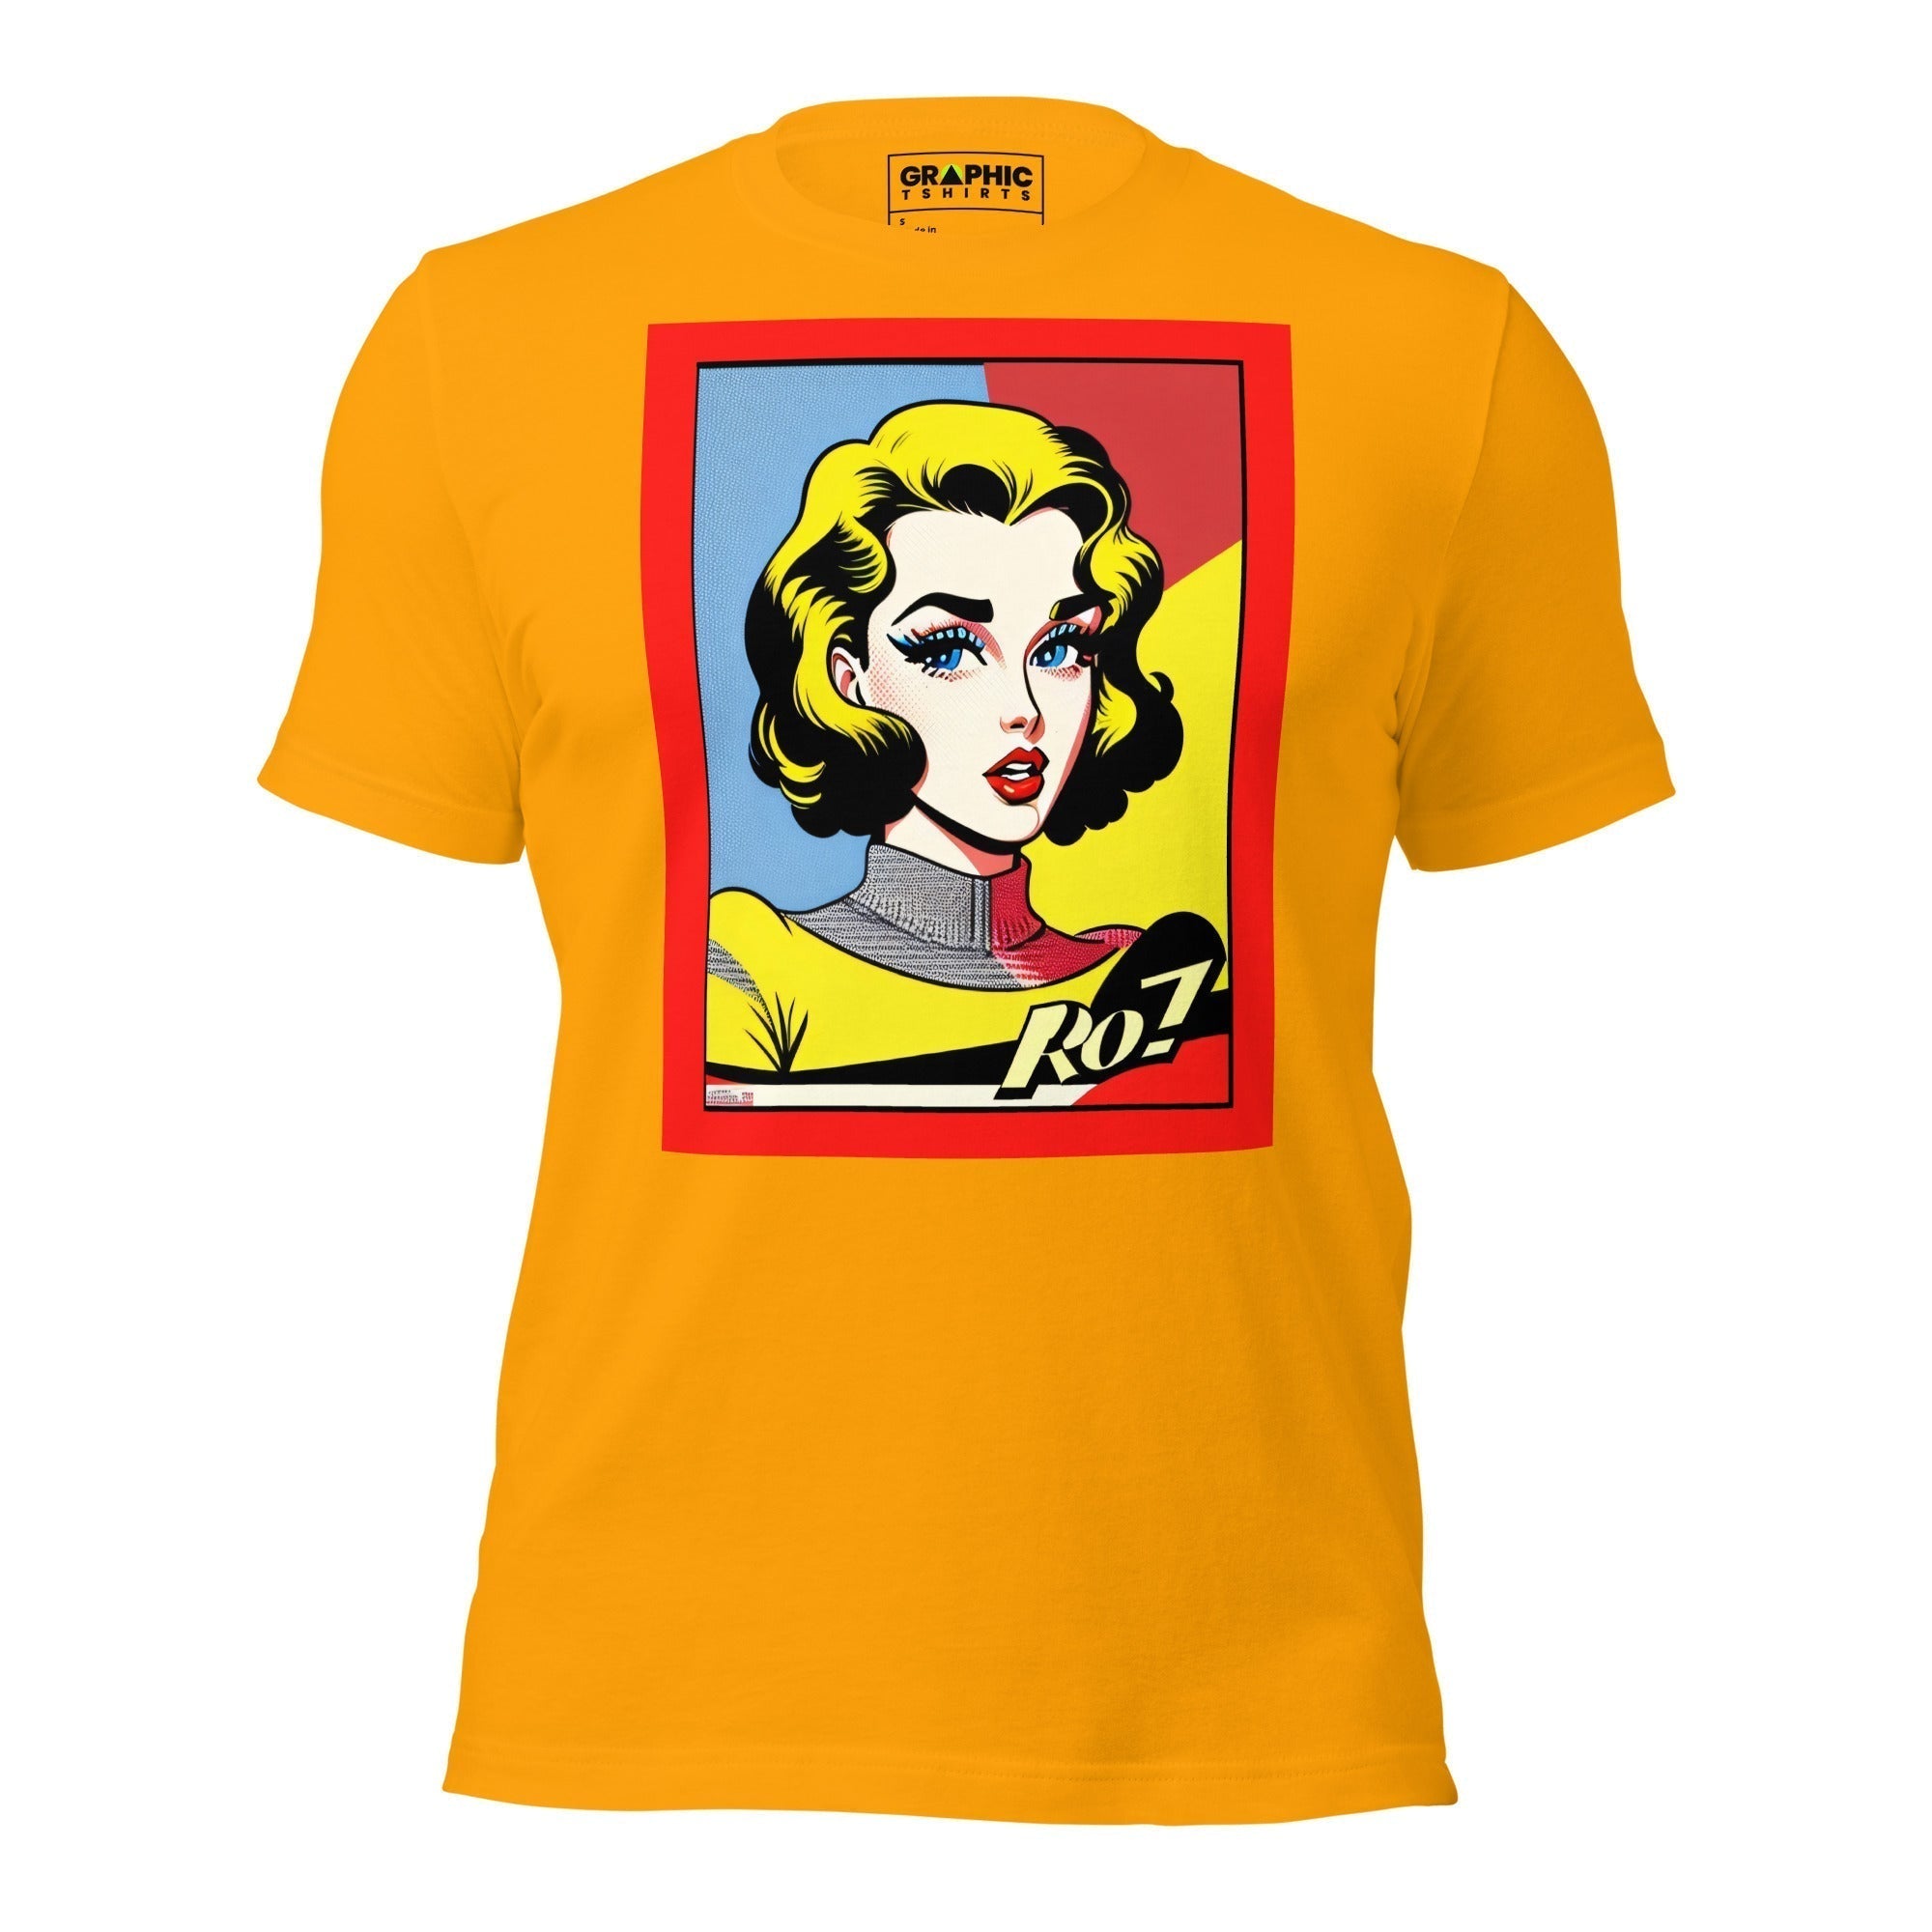 Unisex Crew Neck T-Shirt - Vintage American Comic Series v.30 - GRAPHIC T-SHIRTS